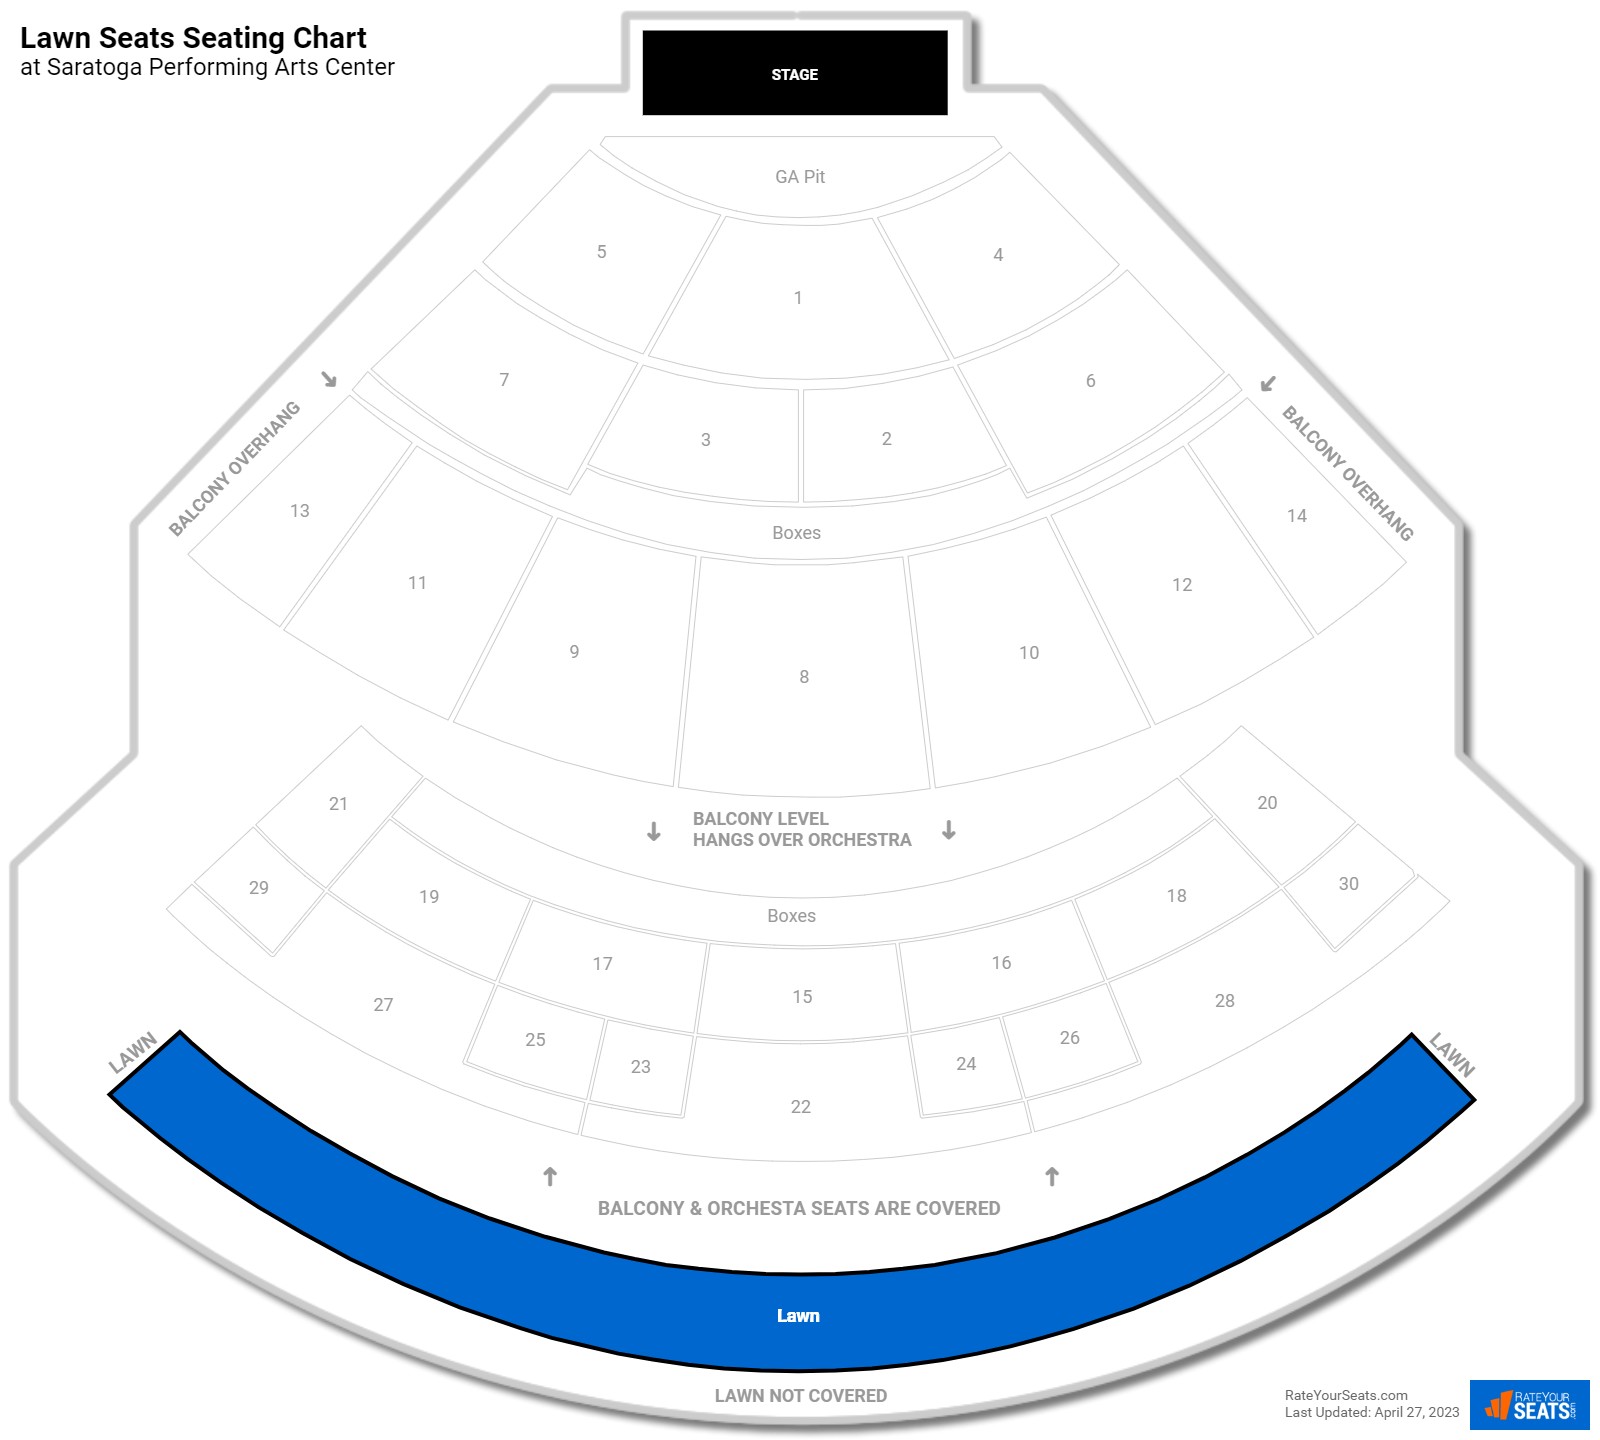 Concert Lawn Seats Seating Chart at Saratoga Performing Arts Center